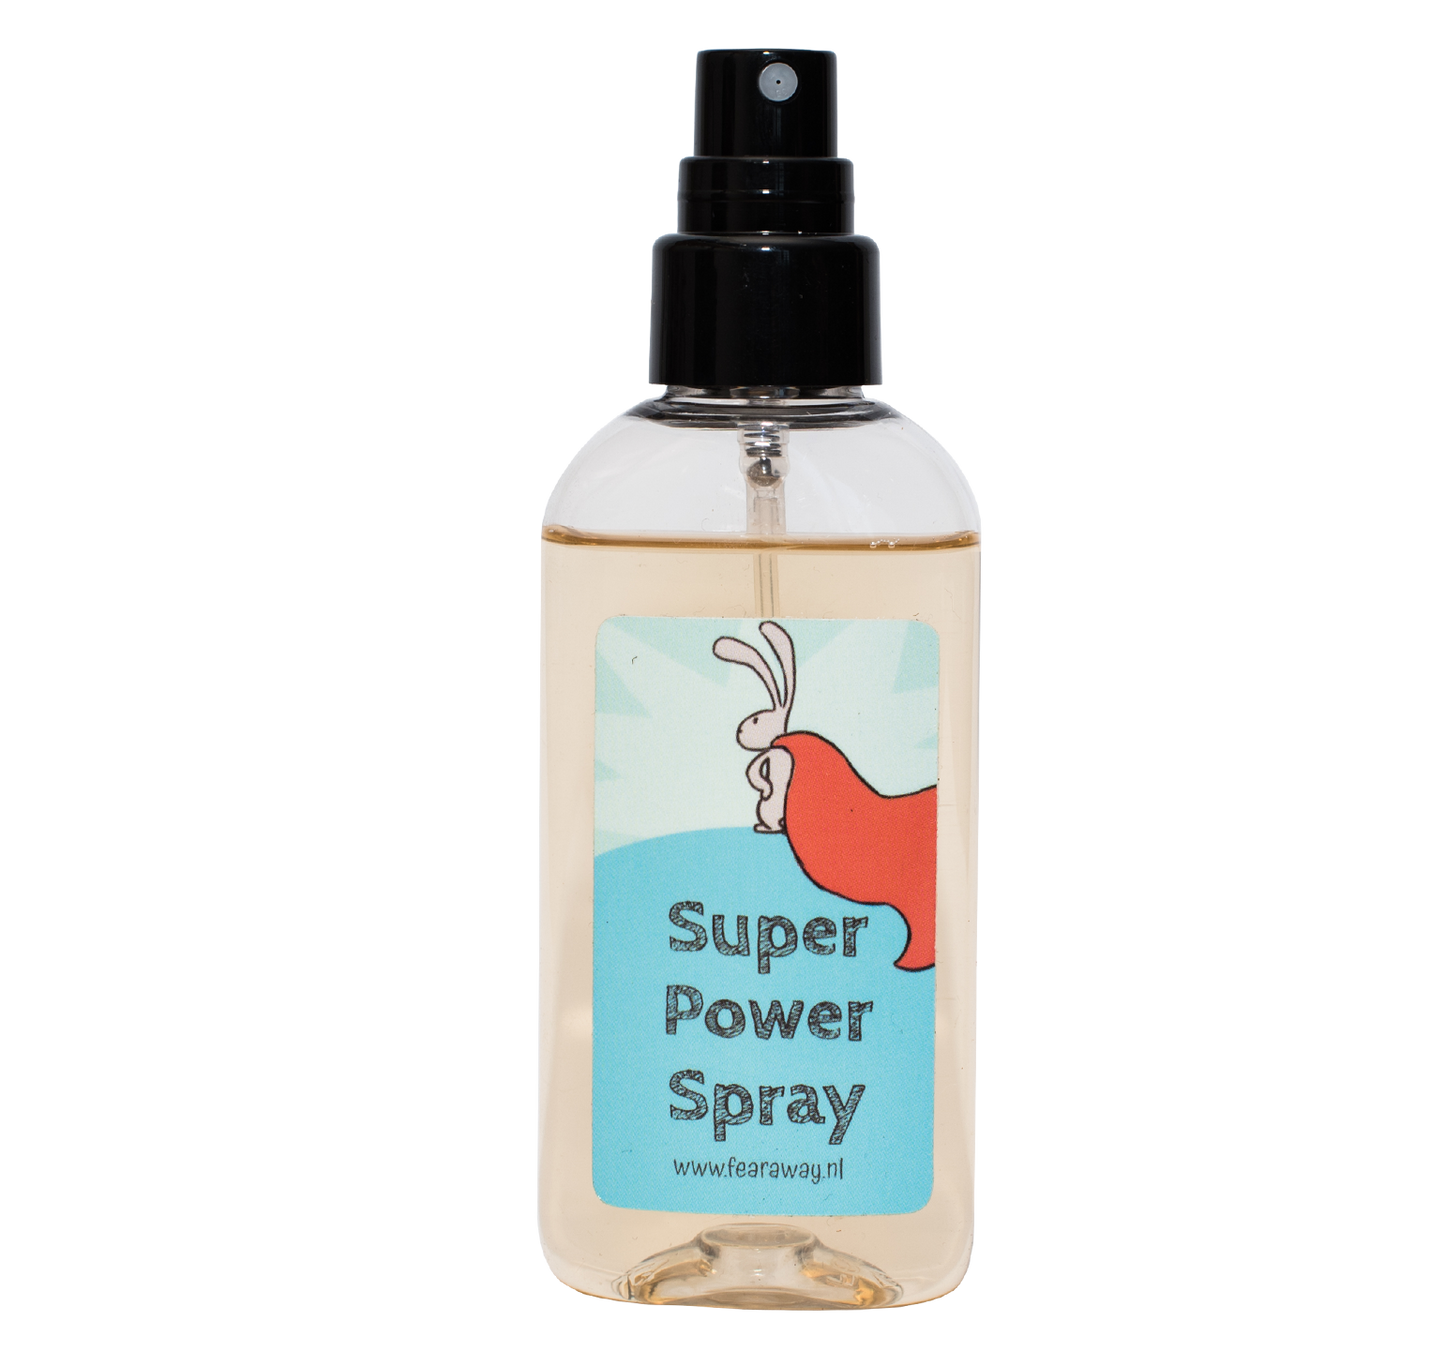 Super Power Spray Fear Away